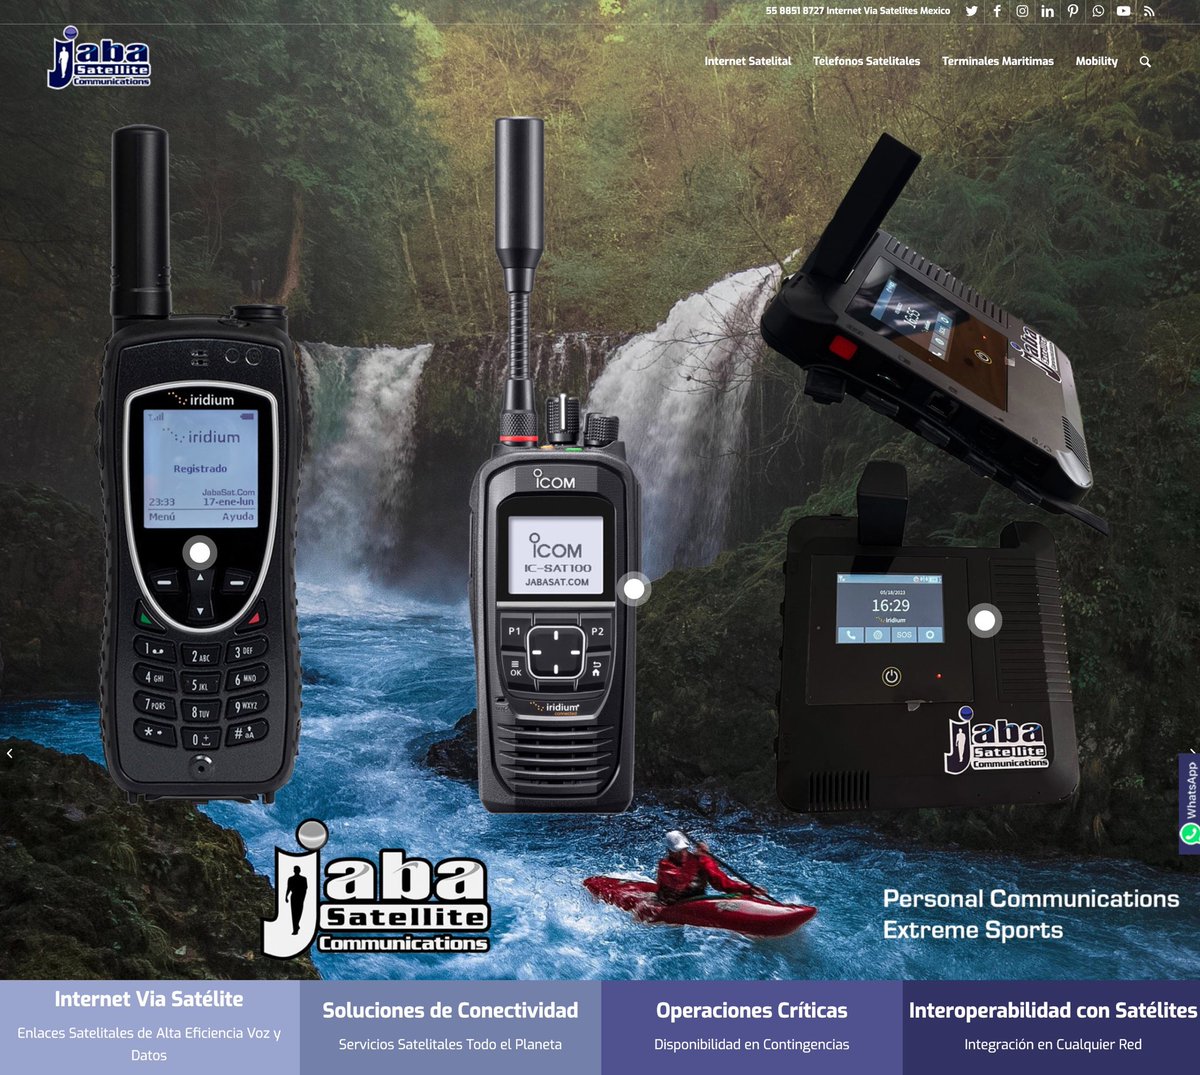 jabasat.com.mx Comunicaciones Personales GMPCS Móviles Globales por Satélites Global Mobile Personal Communication by Satellite #TelefonosSatelitales #IRIDIUMgoExec